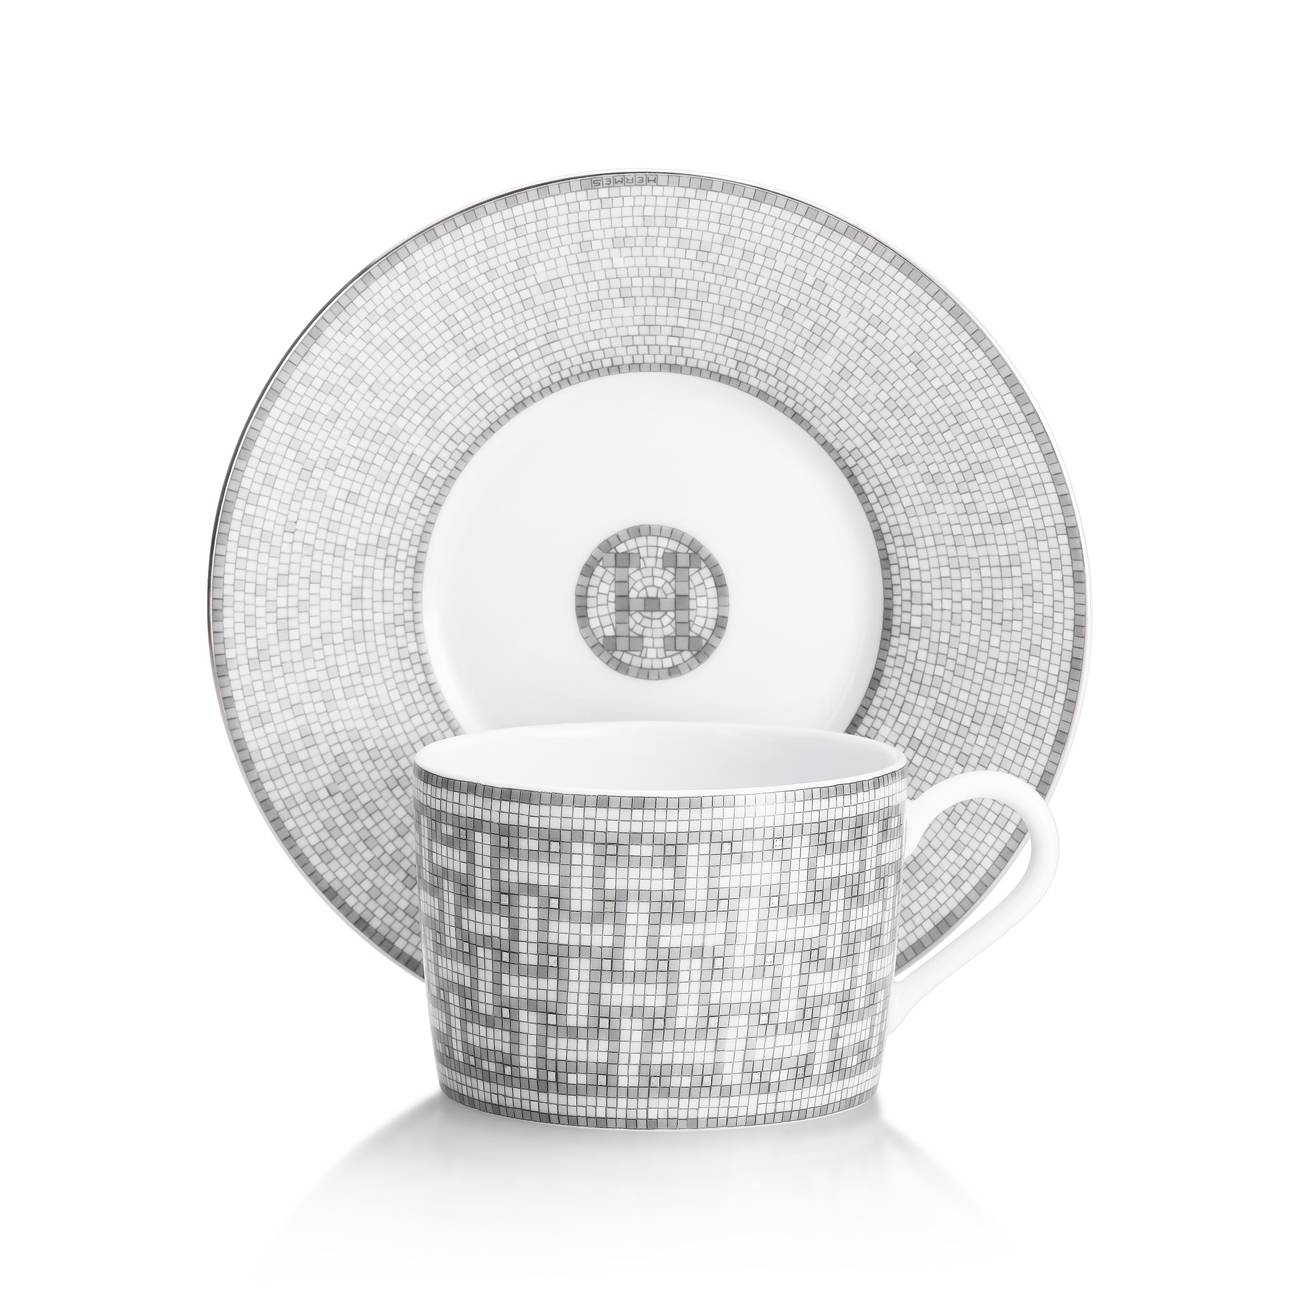 Mosaique au 24 gold tea cup and saucer